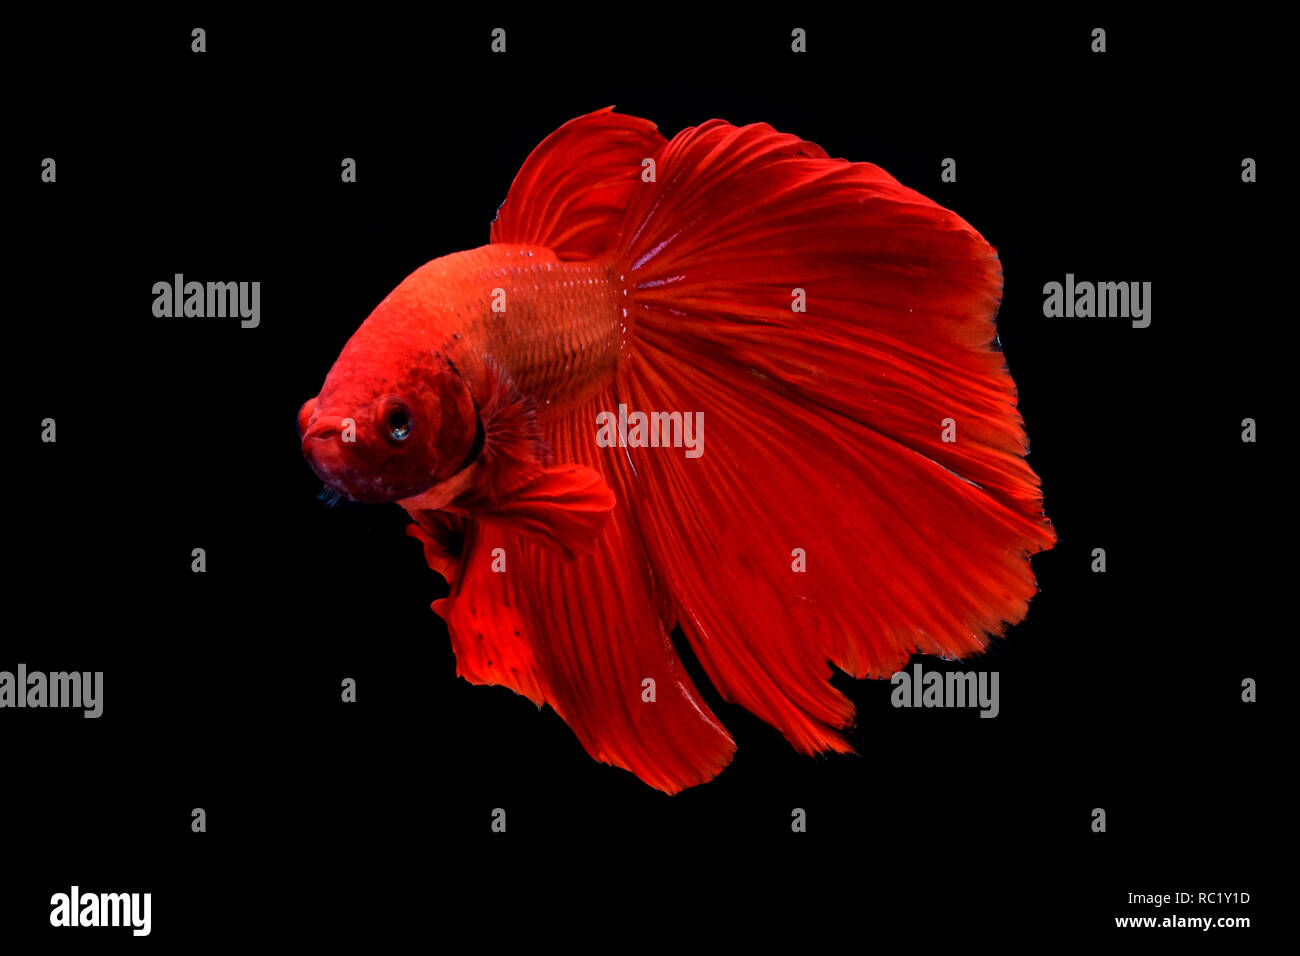 Betta fish fighter Stock Photo - Alamy